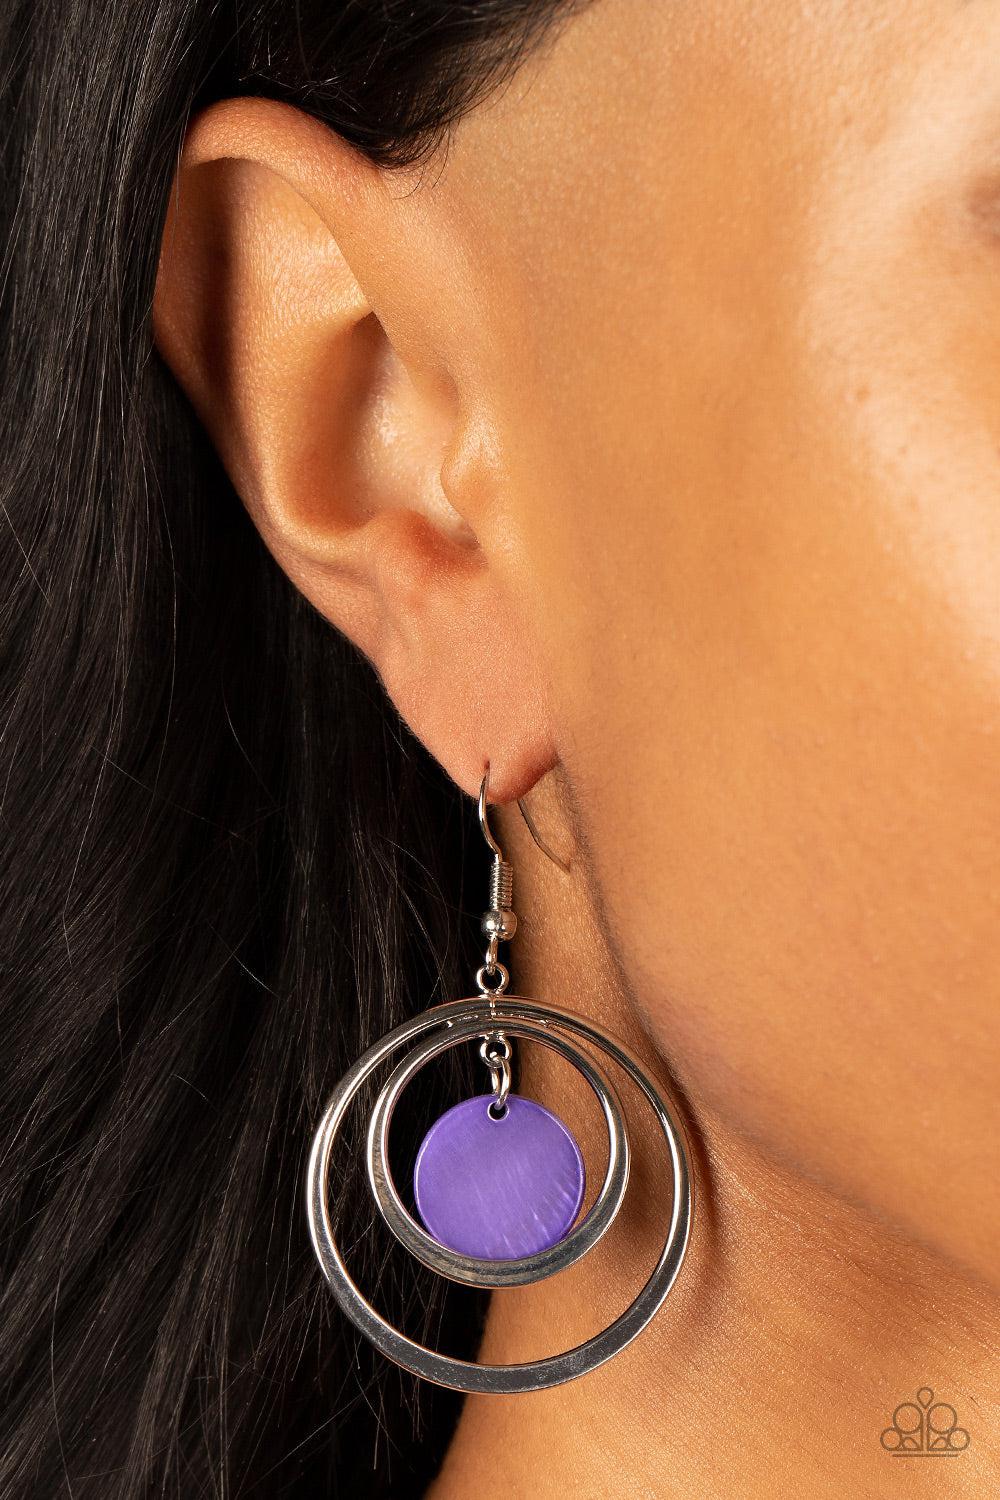 Mai Tai Tango Purple Earrings - Paparazzi Accessories-on model - CarasShop.com - $5 Jewelry by Cara Jewels